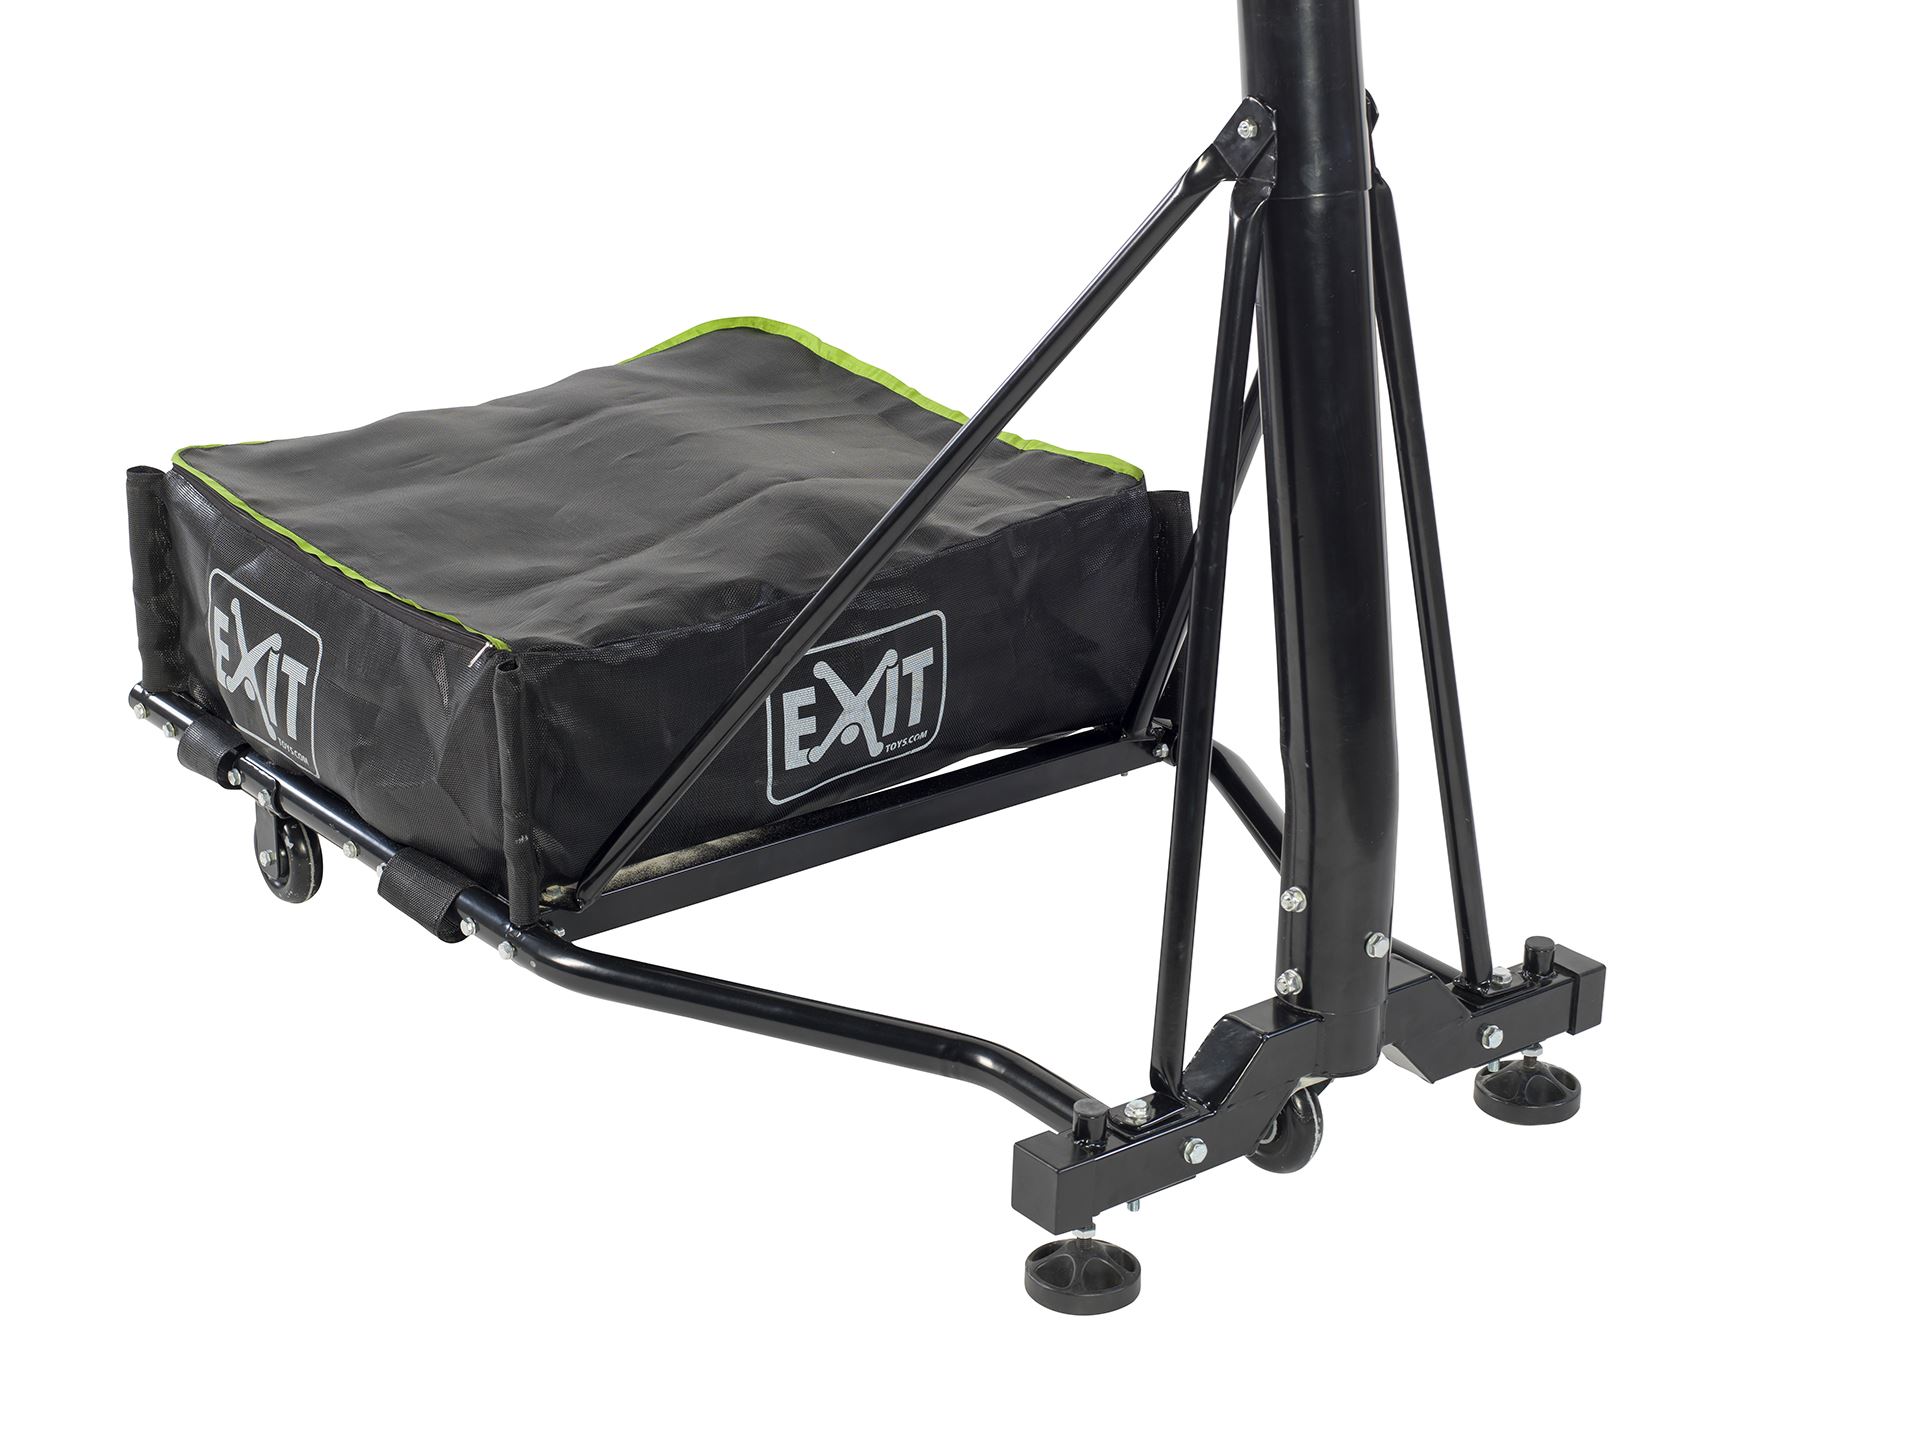 EXIT-Galaxy-verplaatsbaar-basketbalbord-op-wielen-black-edition